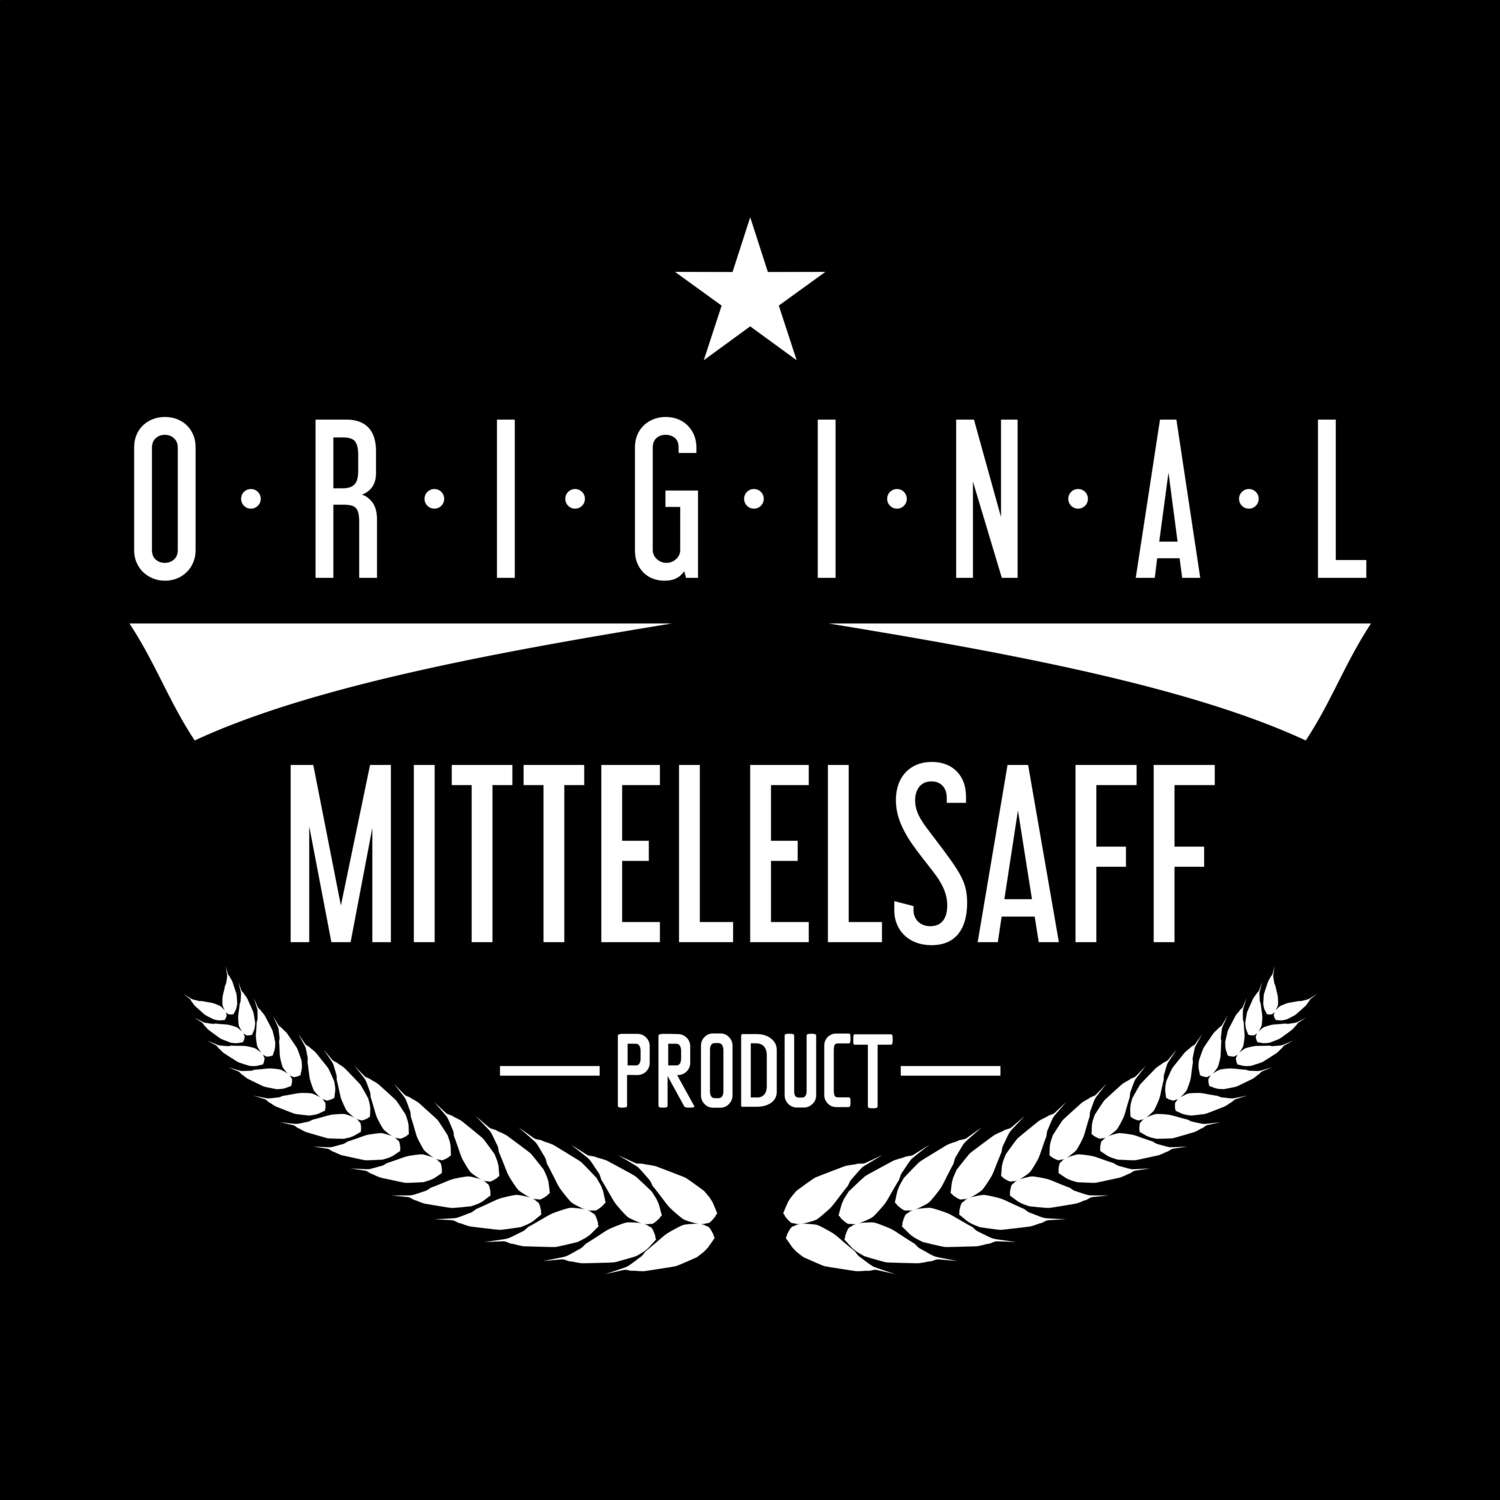 Mittelelsaff T-Shirt »Original Product«